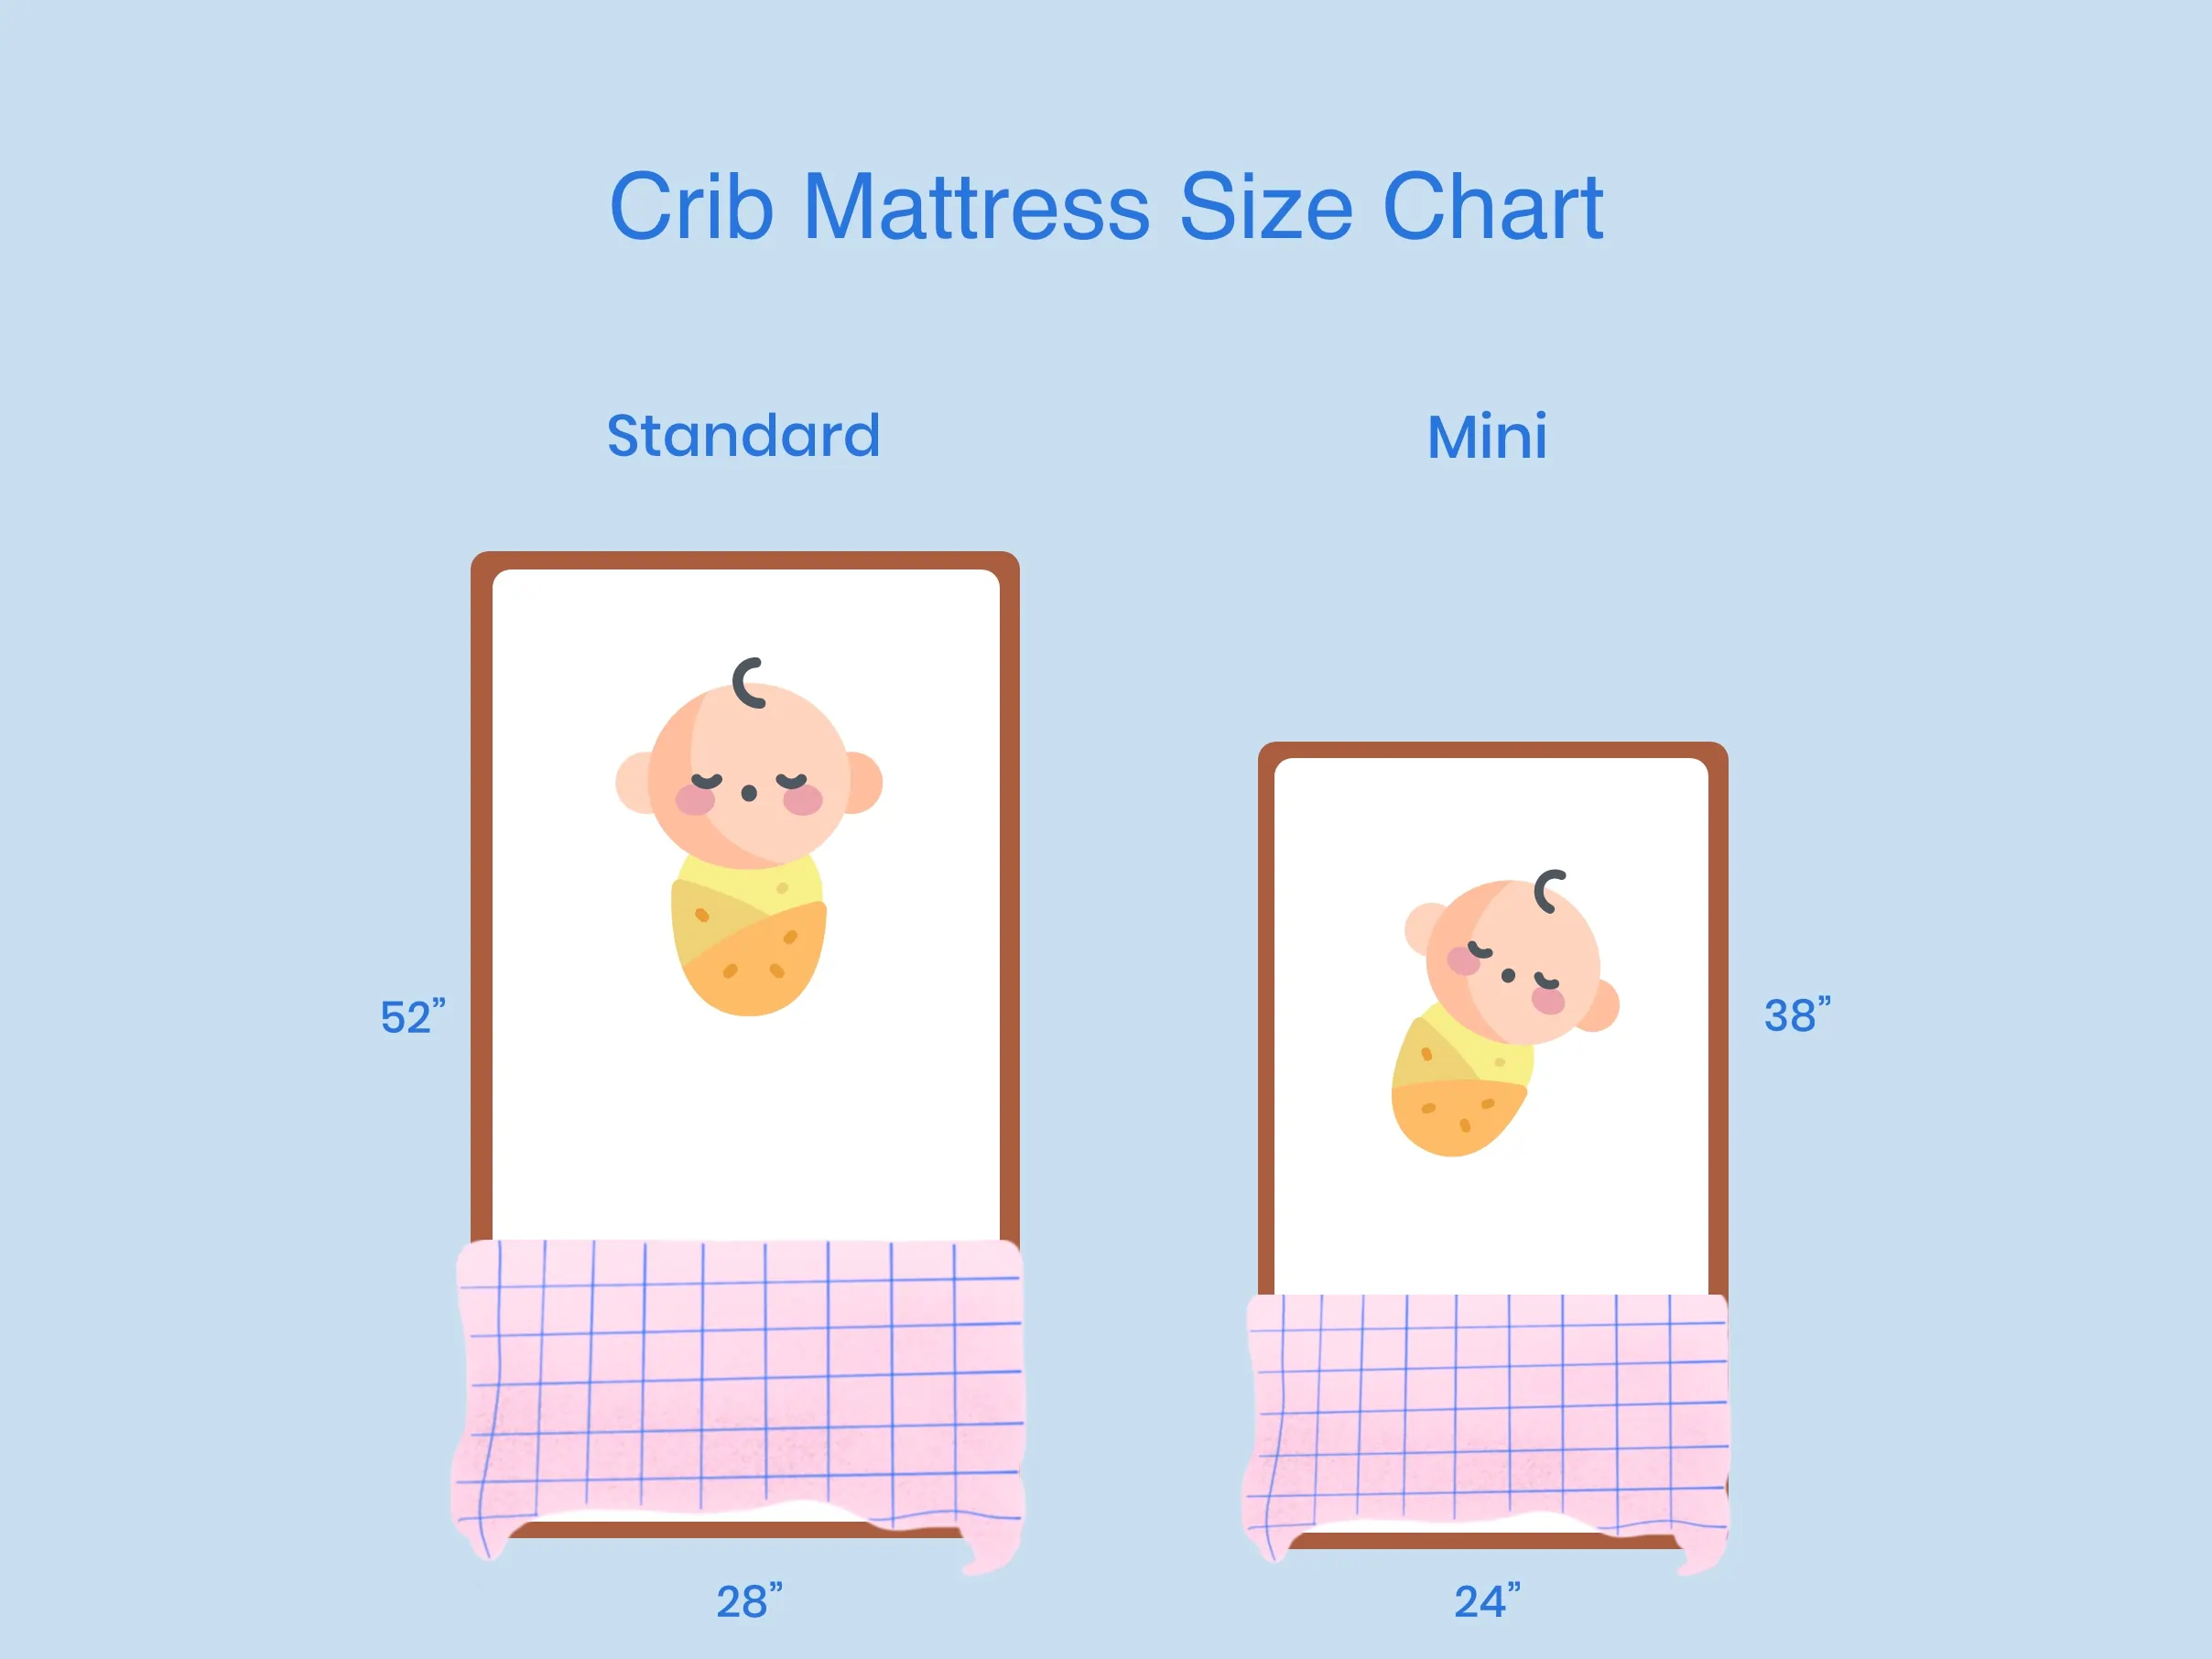 How Long Does a Crib Mattress Last?